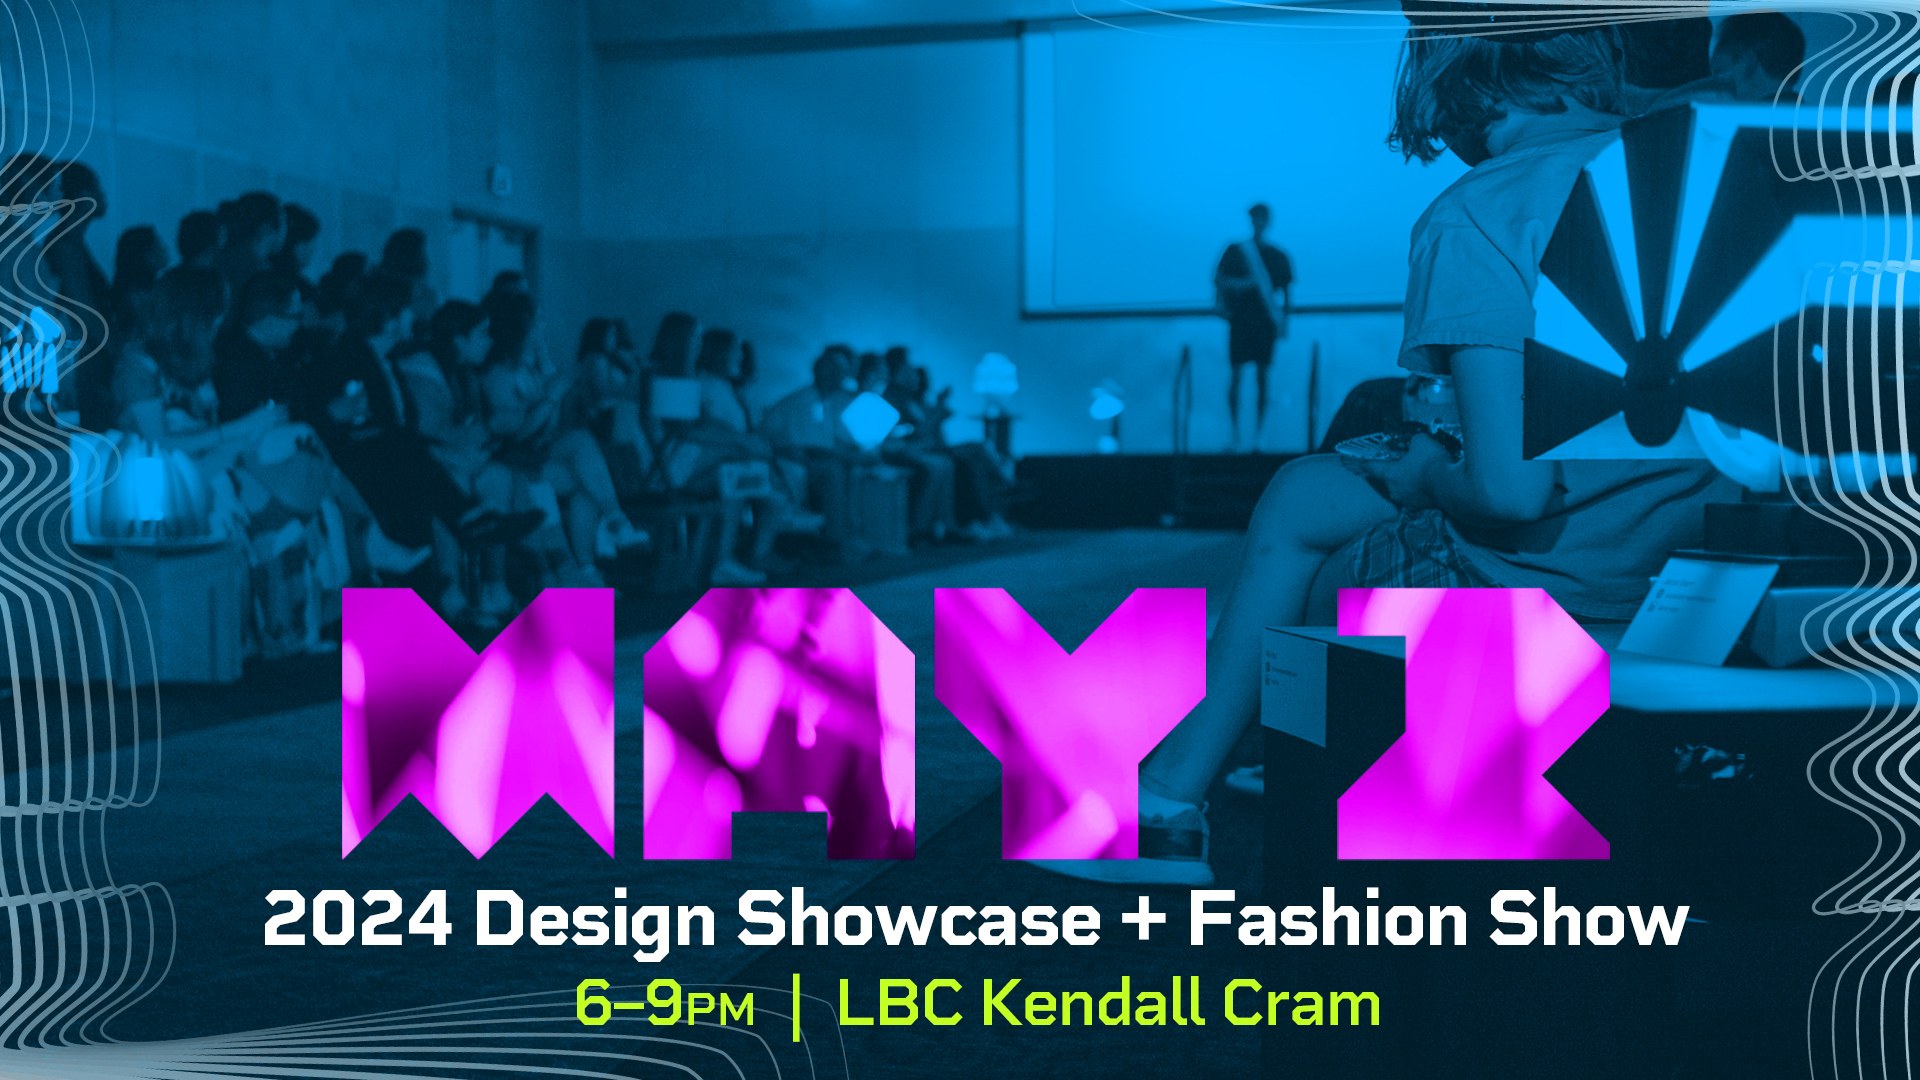 Digital poster that says "May 2, 2024 Design Showcase + Fashion Show, 6-9pm, LBC Kendall Cram".